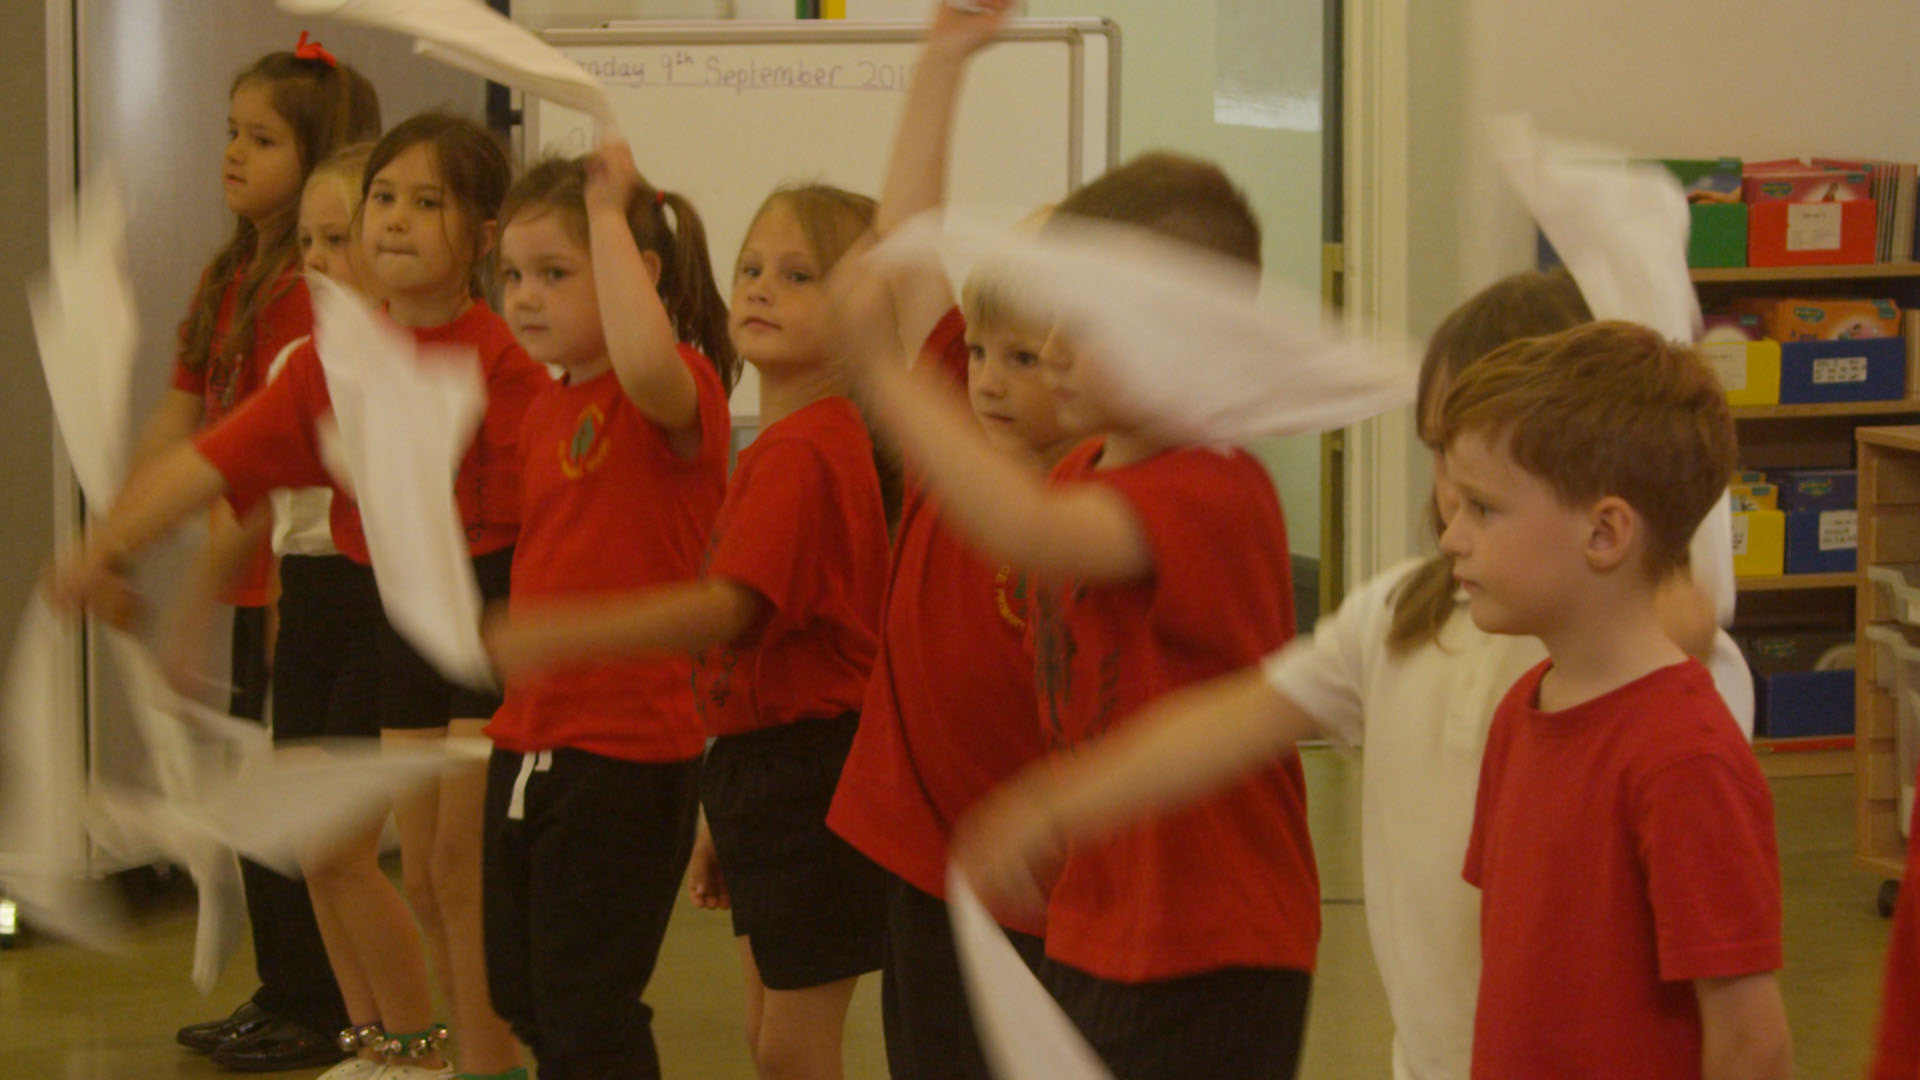 School children performing morris dancing